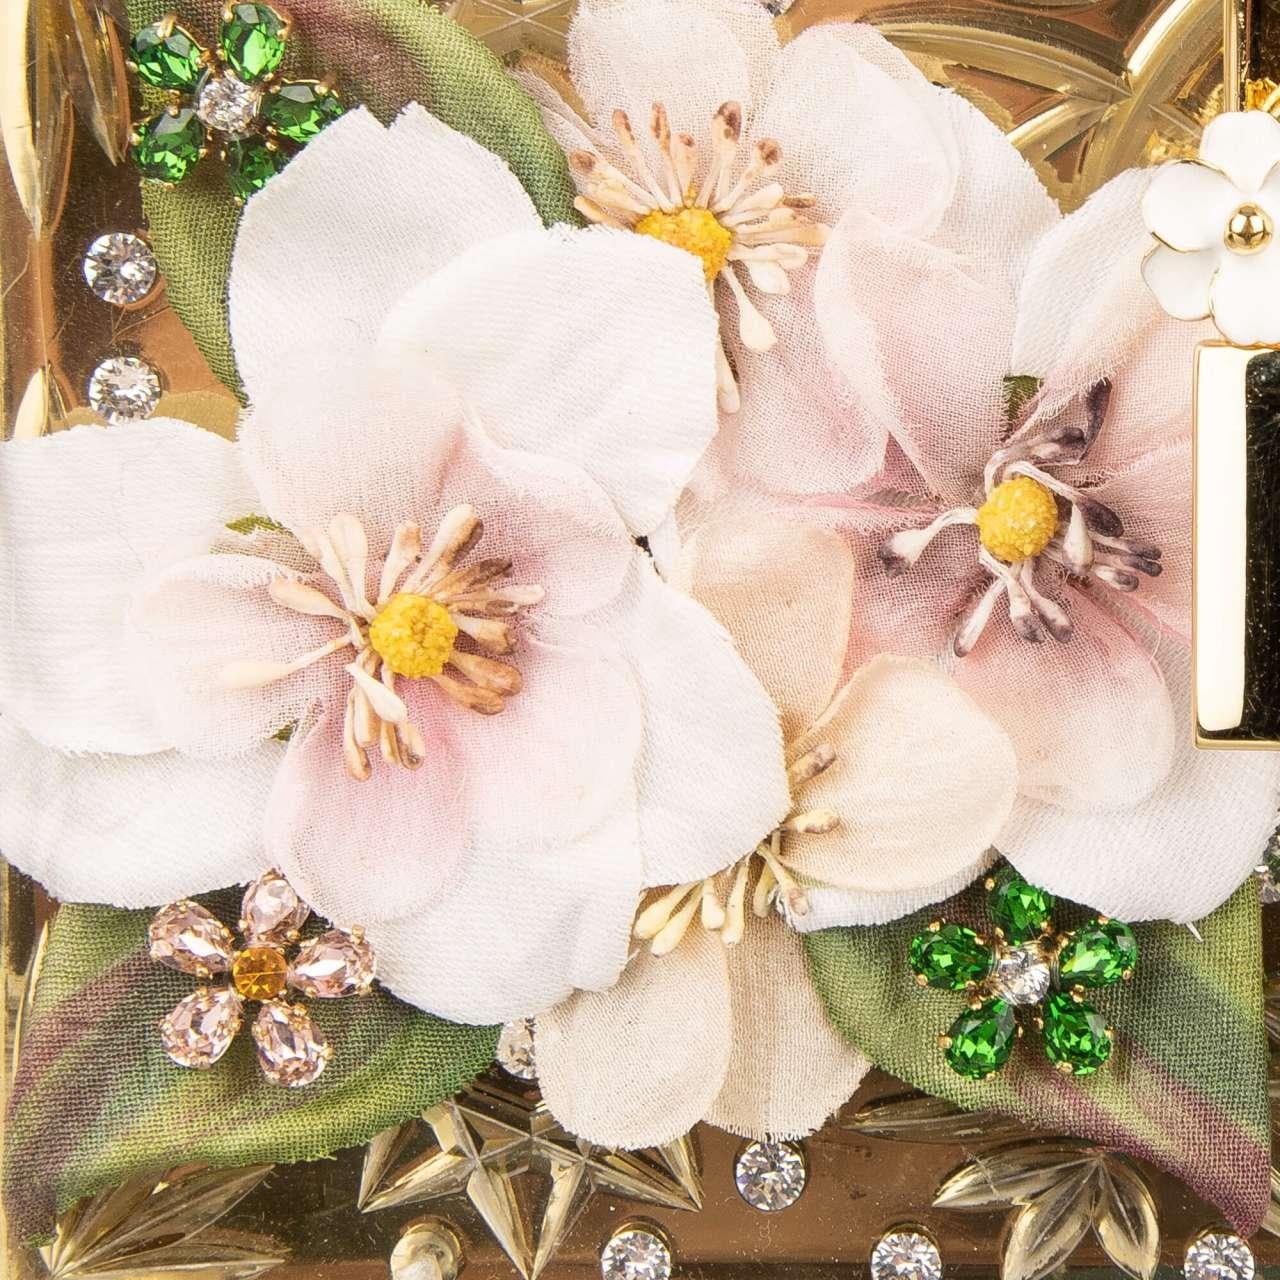 Women's D&G Crystals Plexiglas Clutch Bag DOLCE BOX with Flowers Showcase Gold